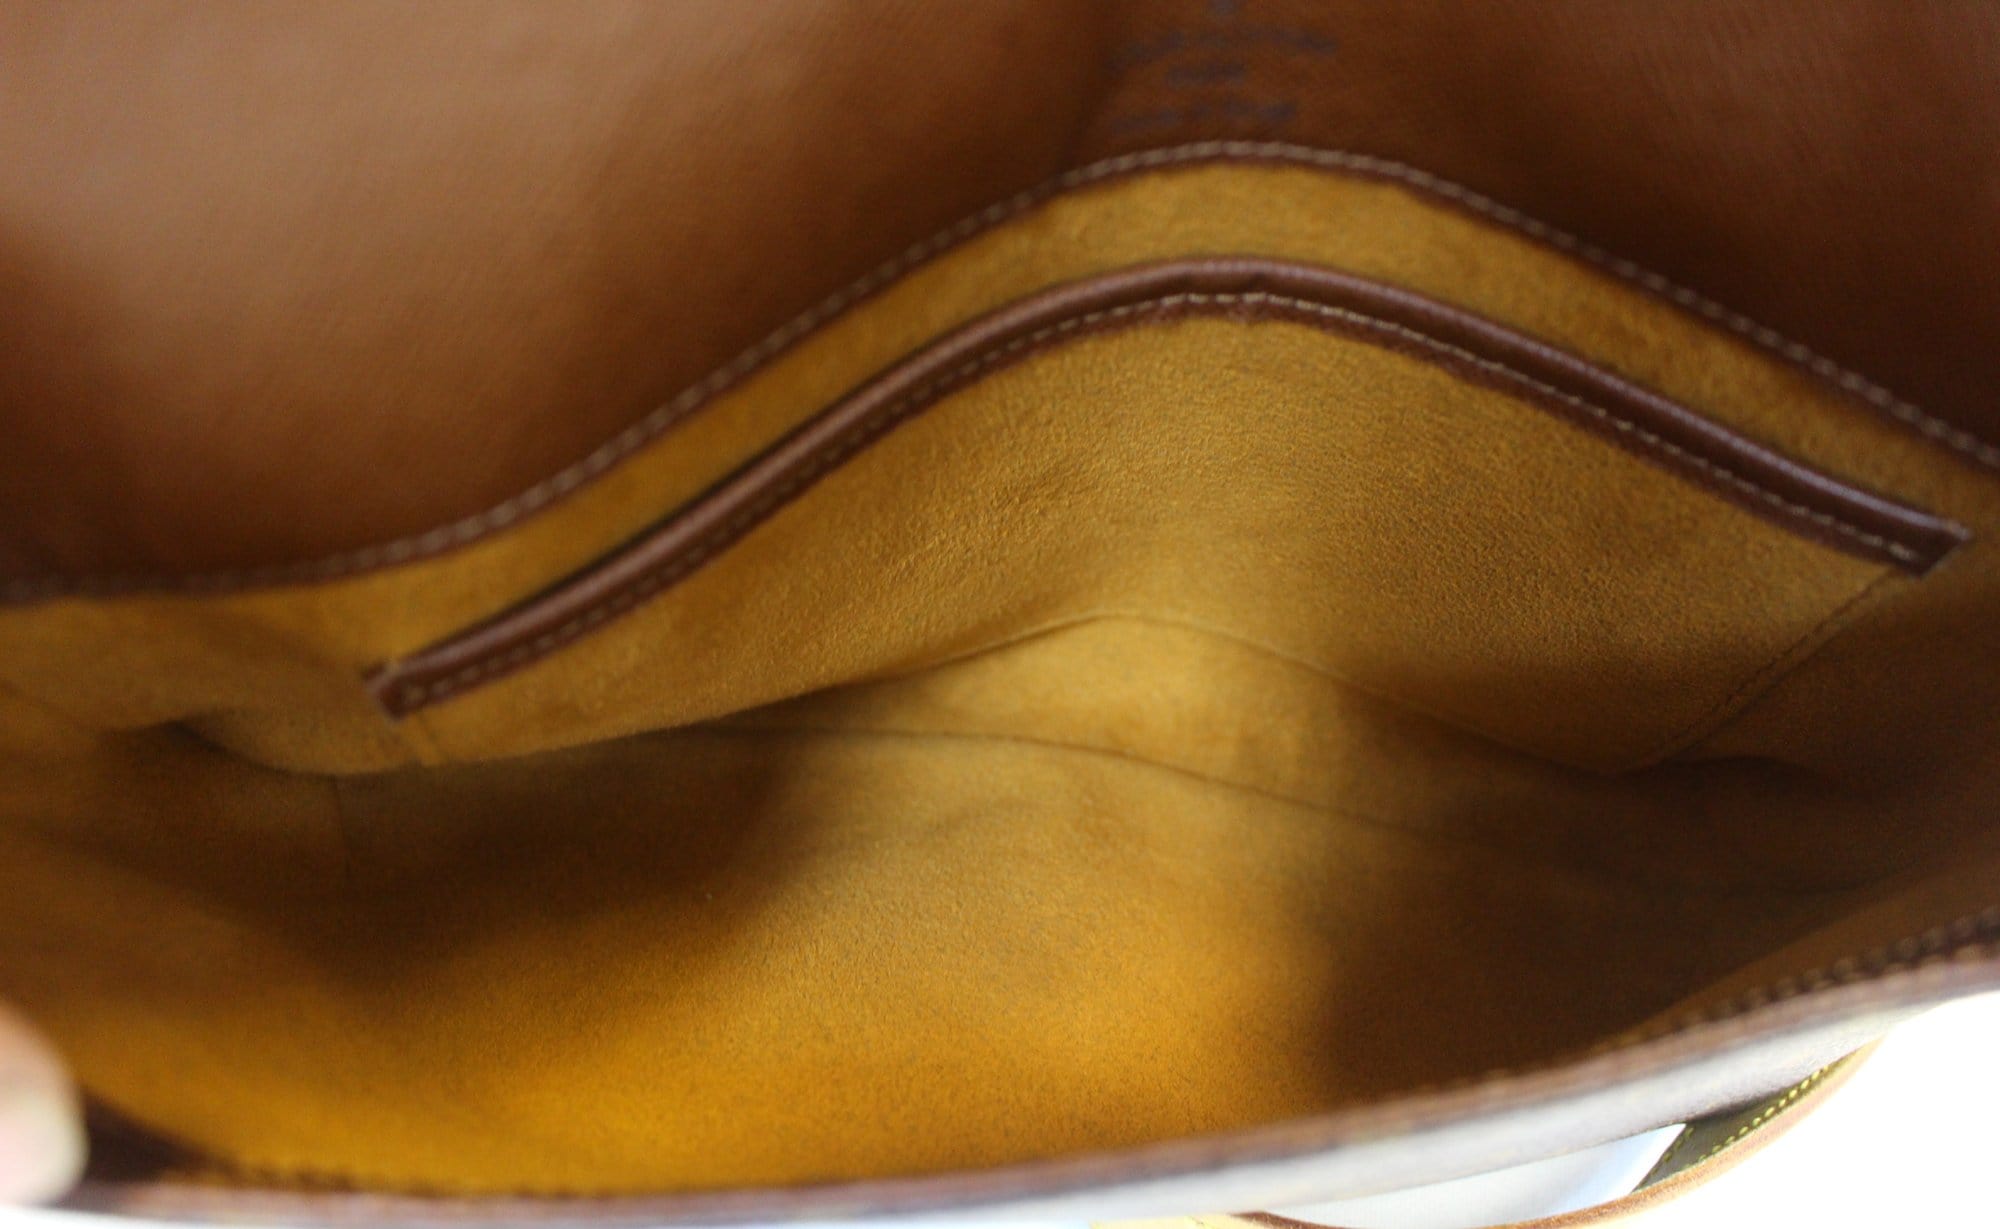 Louis Vuitton 2003 pre-owned Musette Tango crossbody bag